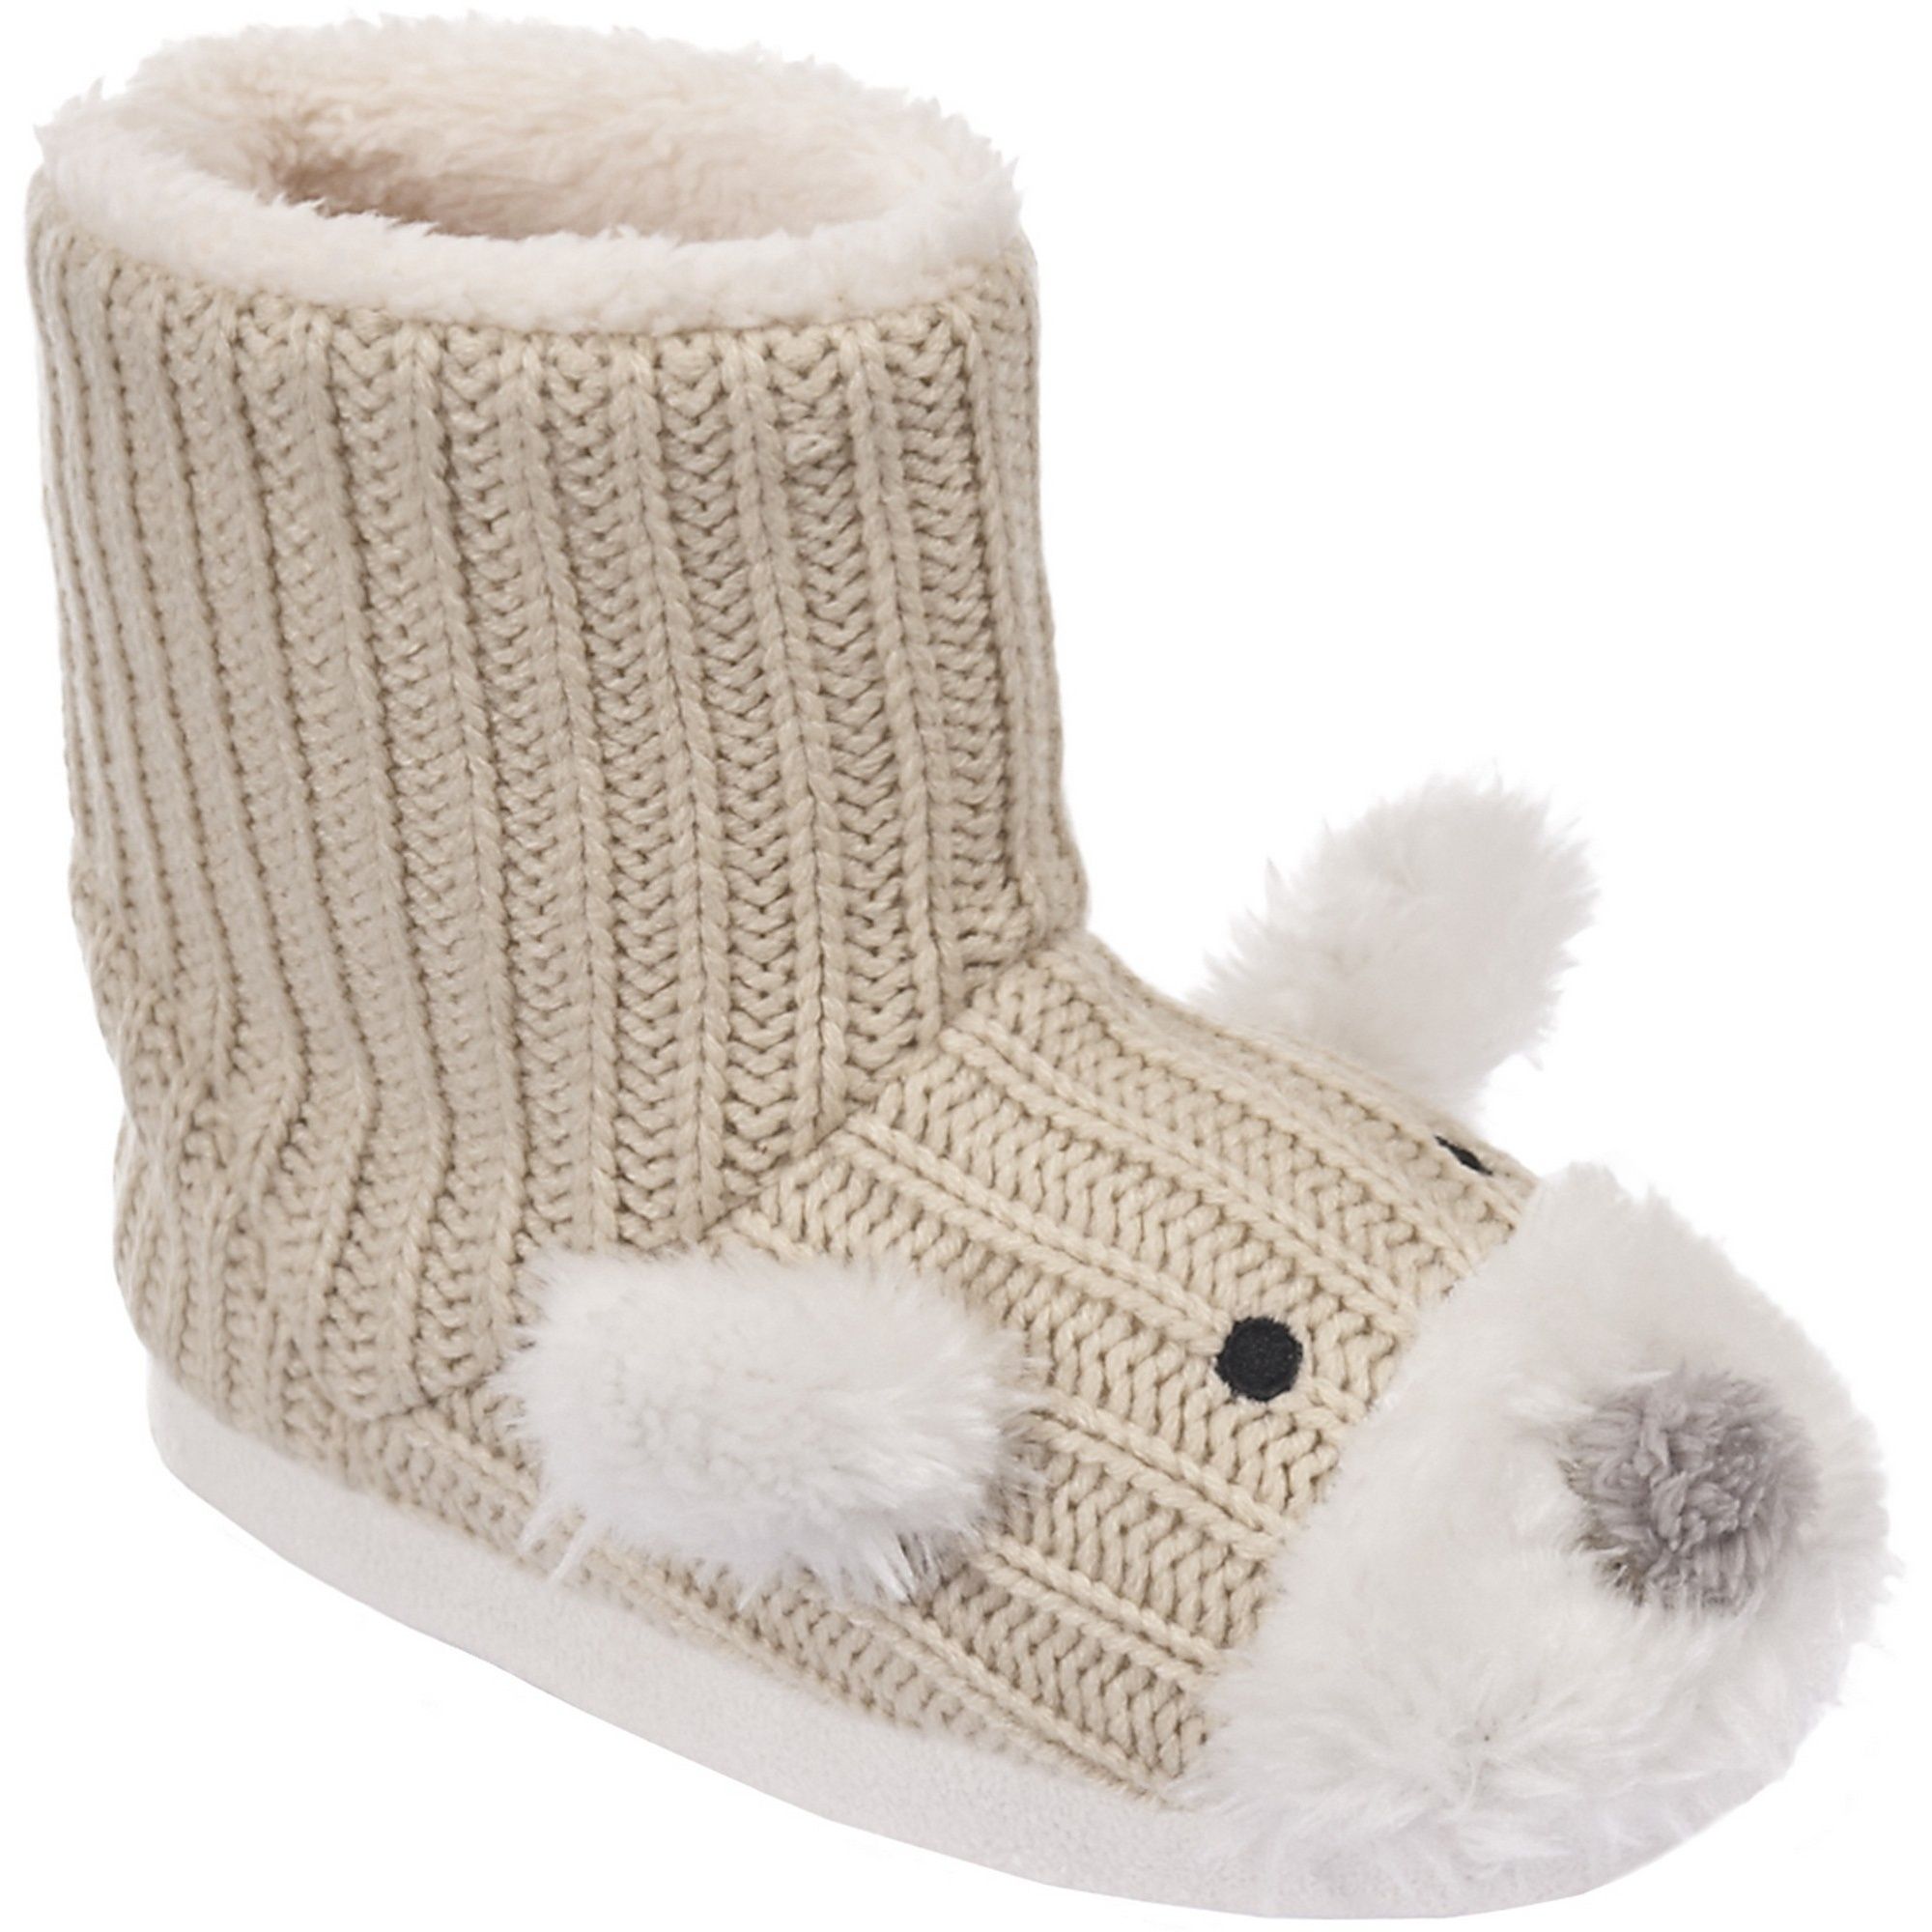 Kids novelty slipper with cute teddy bear design and soft fleece lining. Upper: Knit, Lining: Fleece, Outsole: Microfibre.